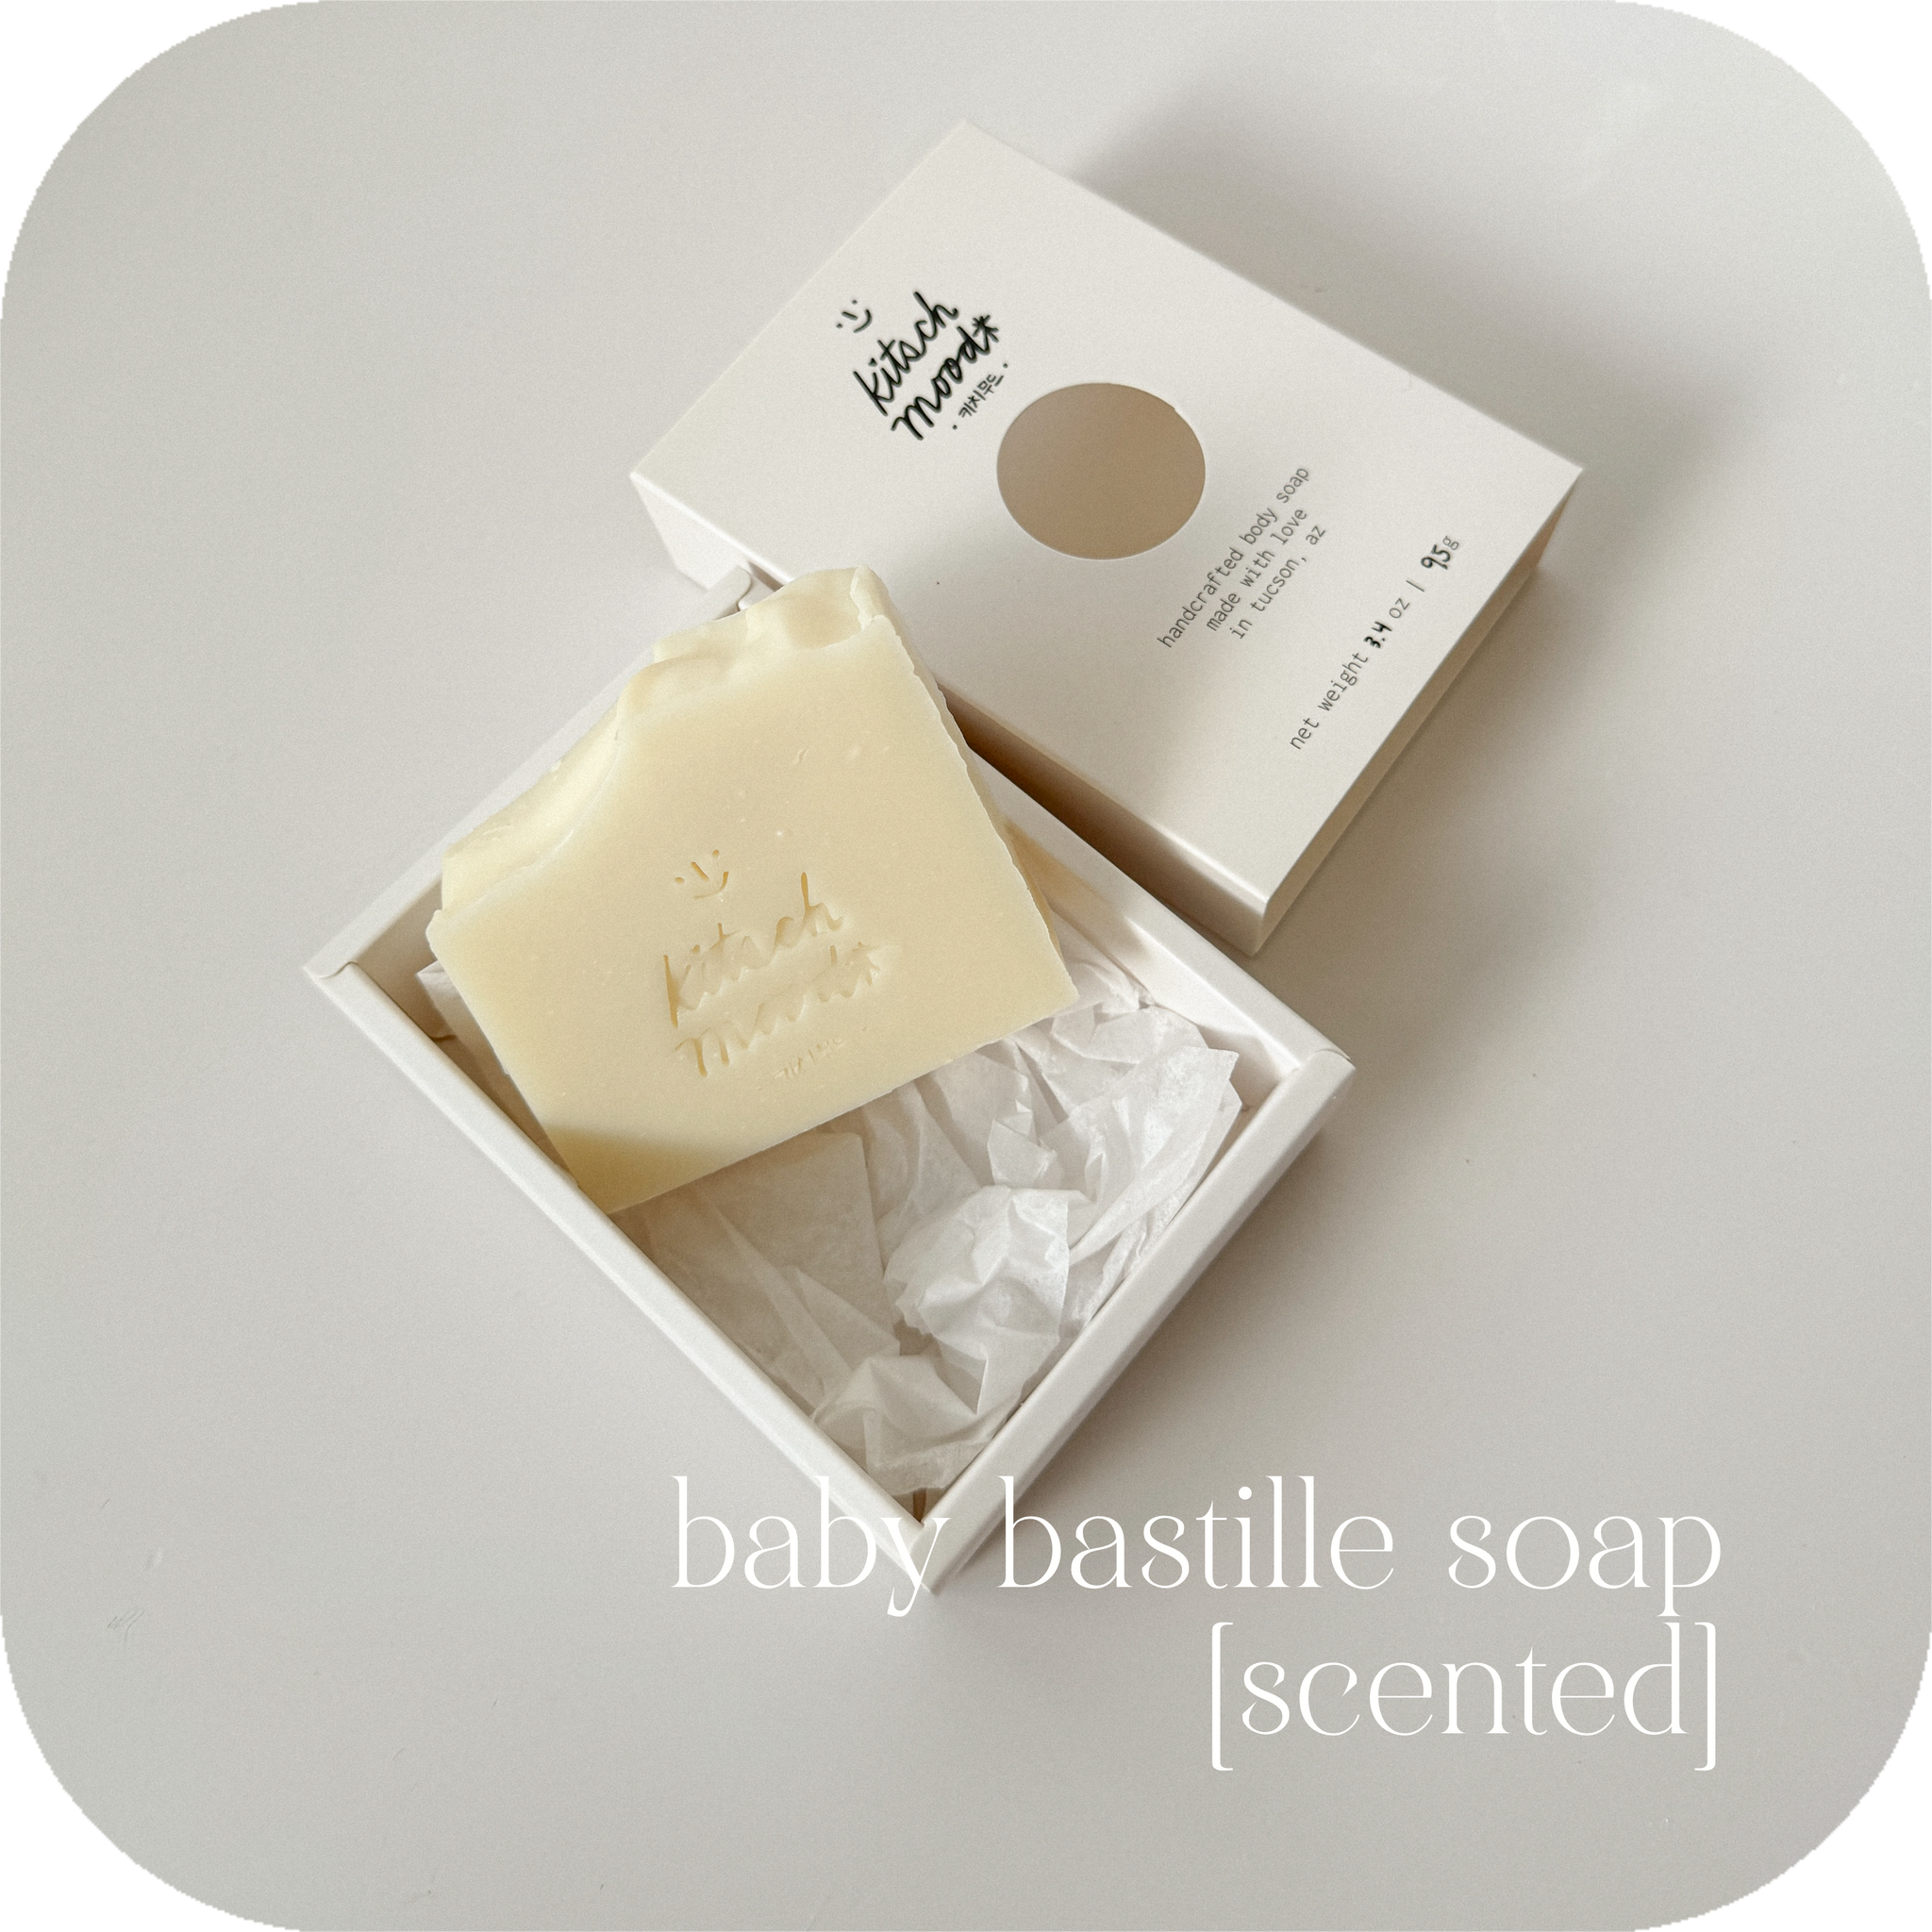 [scented] baby bastille